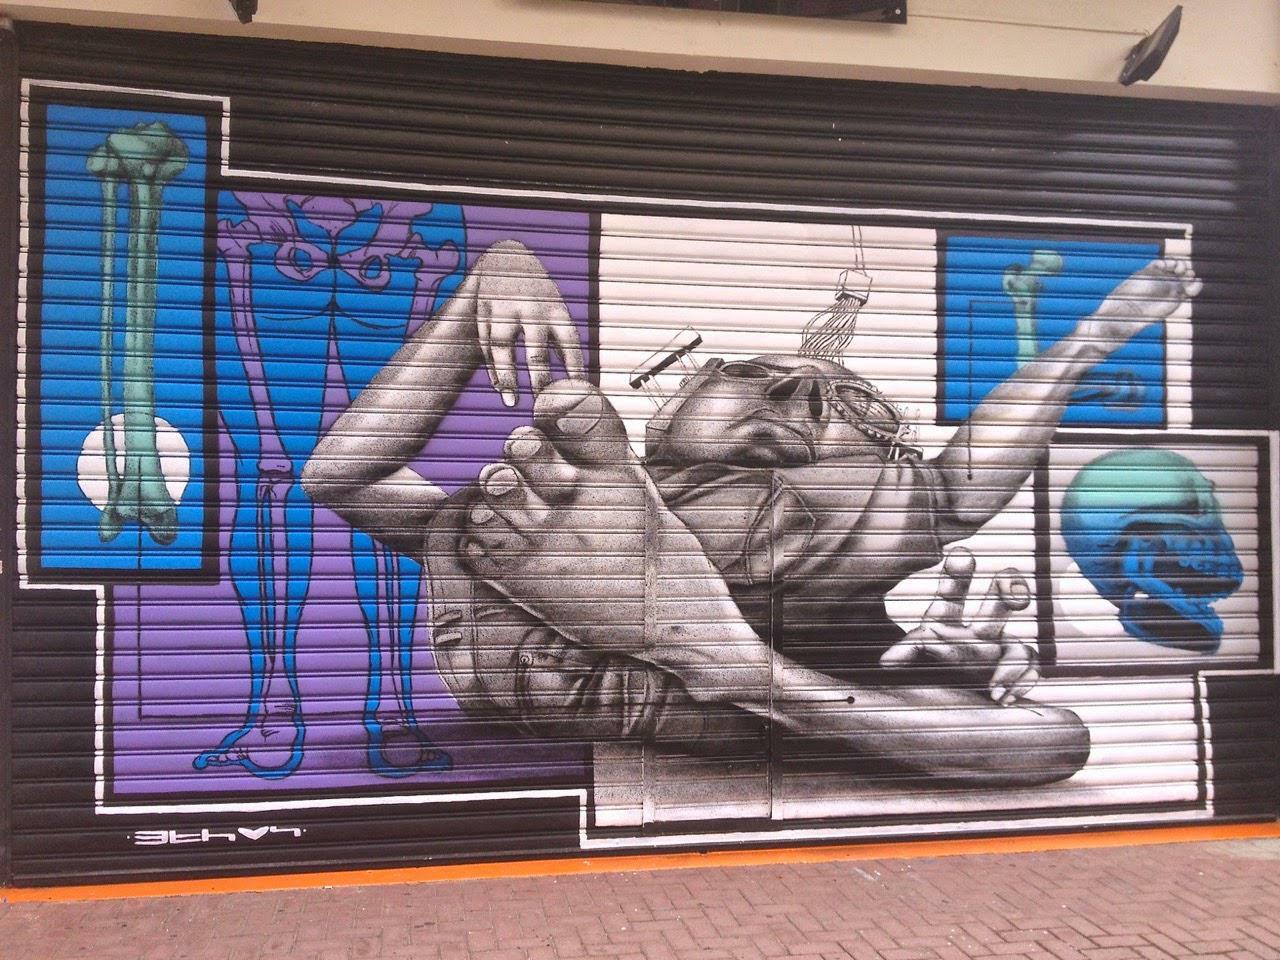 Streetart by Ethos in São Paulo (Brazil)

#streetart #urbanart #mural #art #graffiti http://t.co/eiN29AWLYf